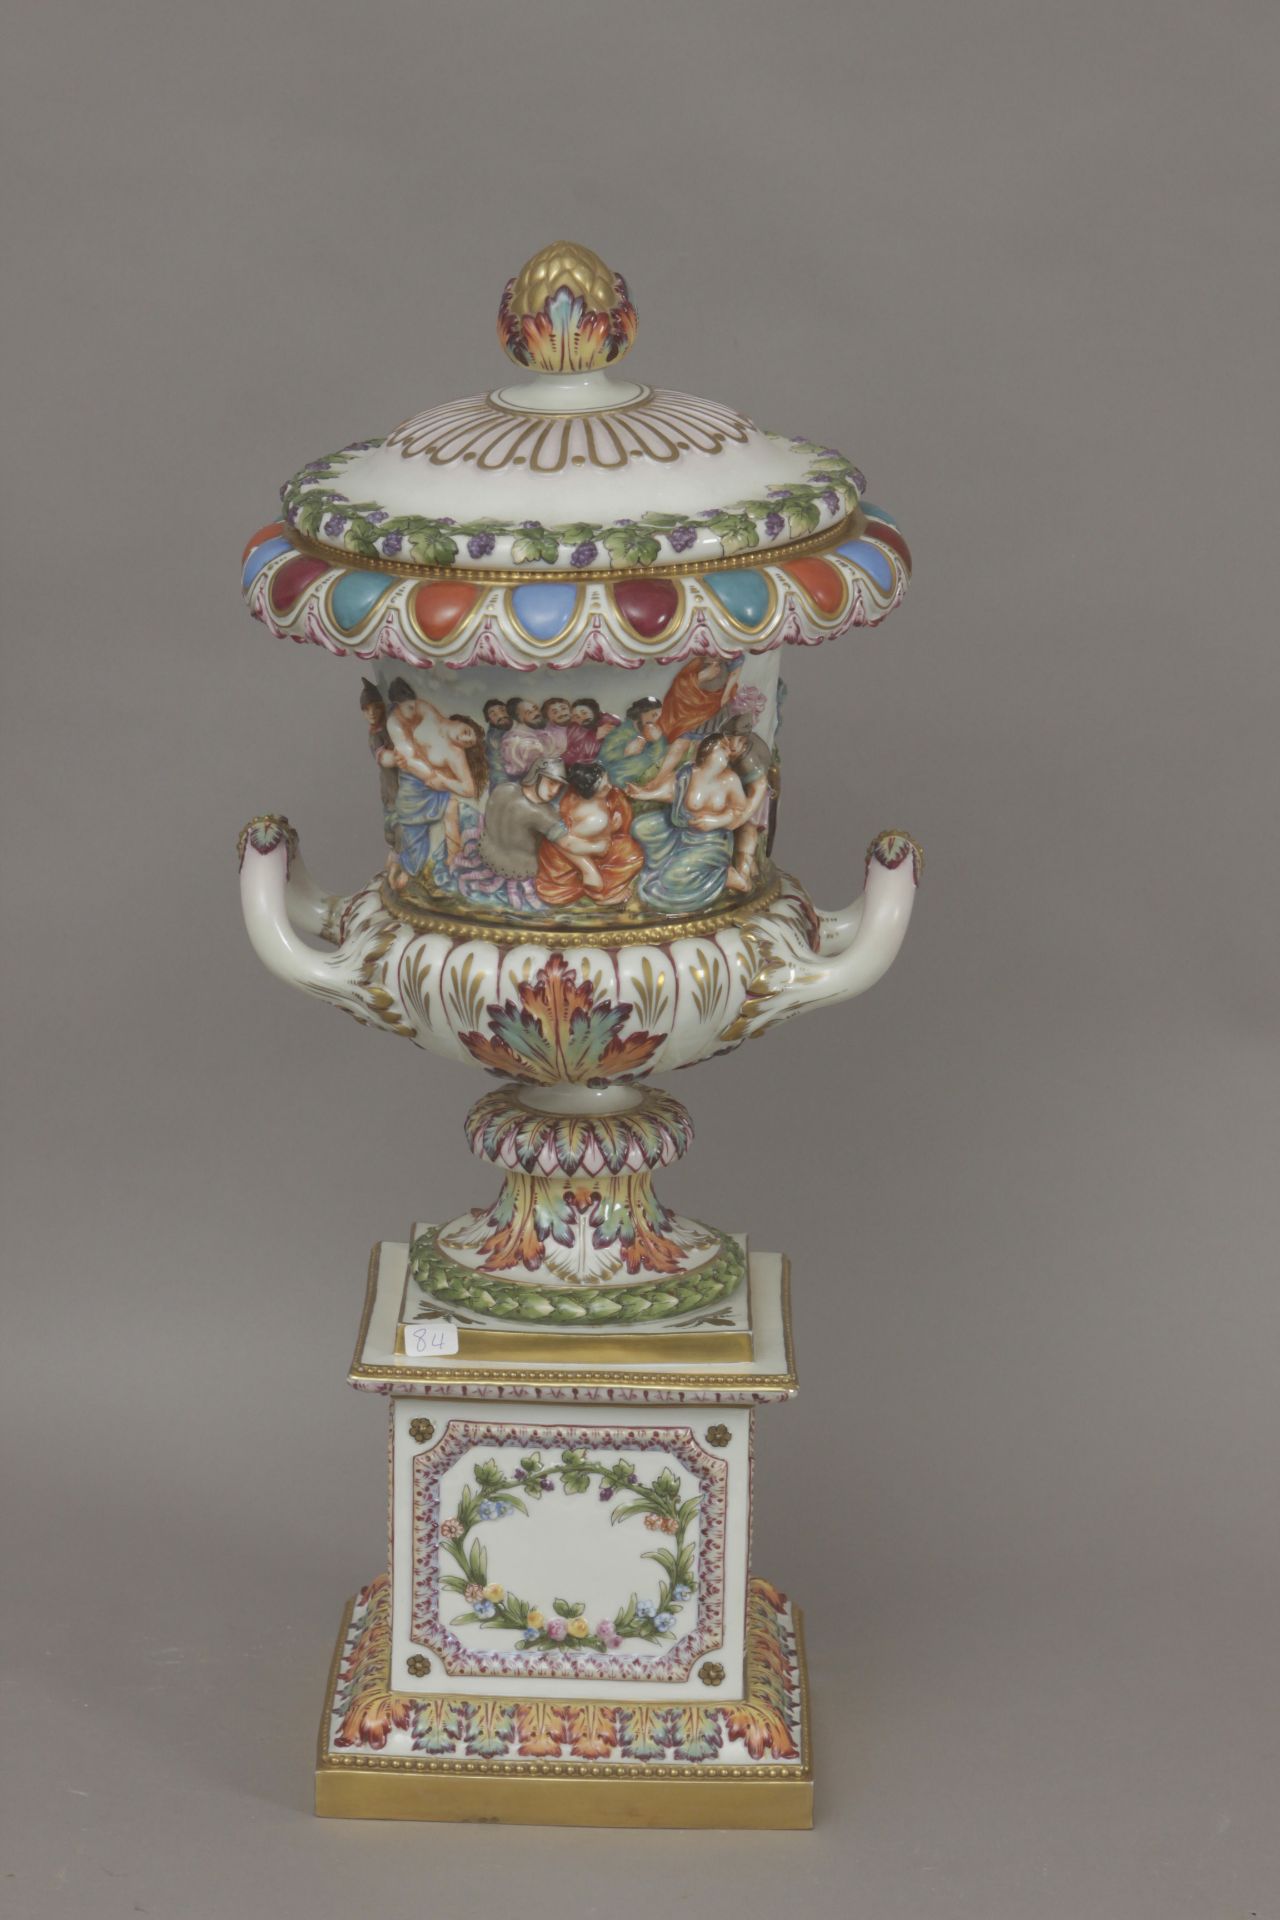 A 20th century Medici vase in Capodimonte porcelain